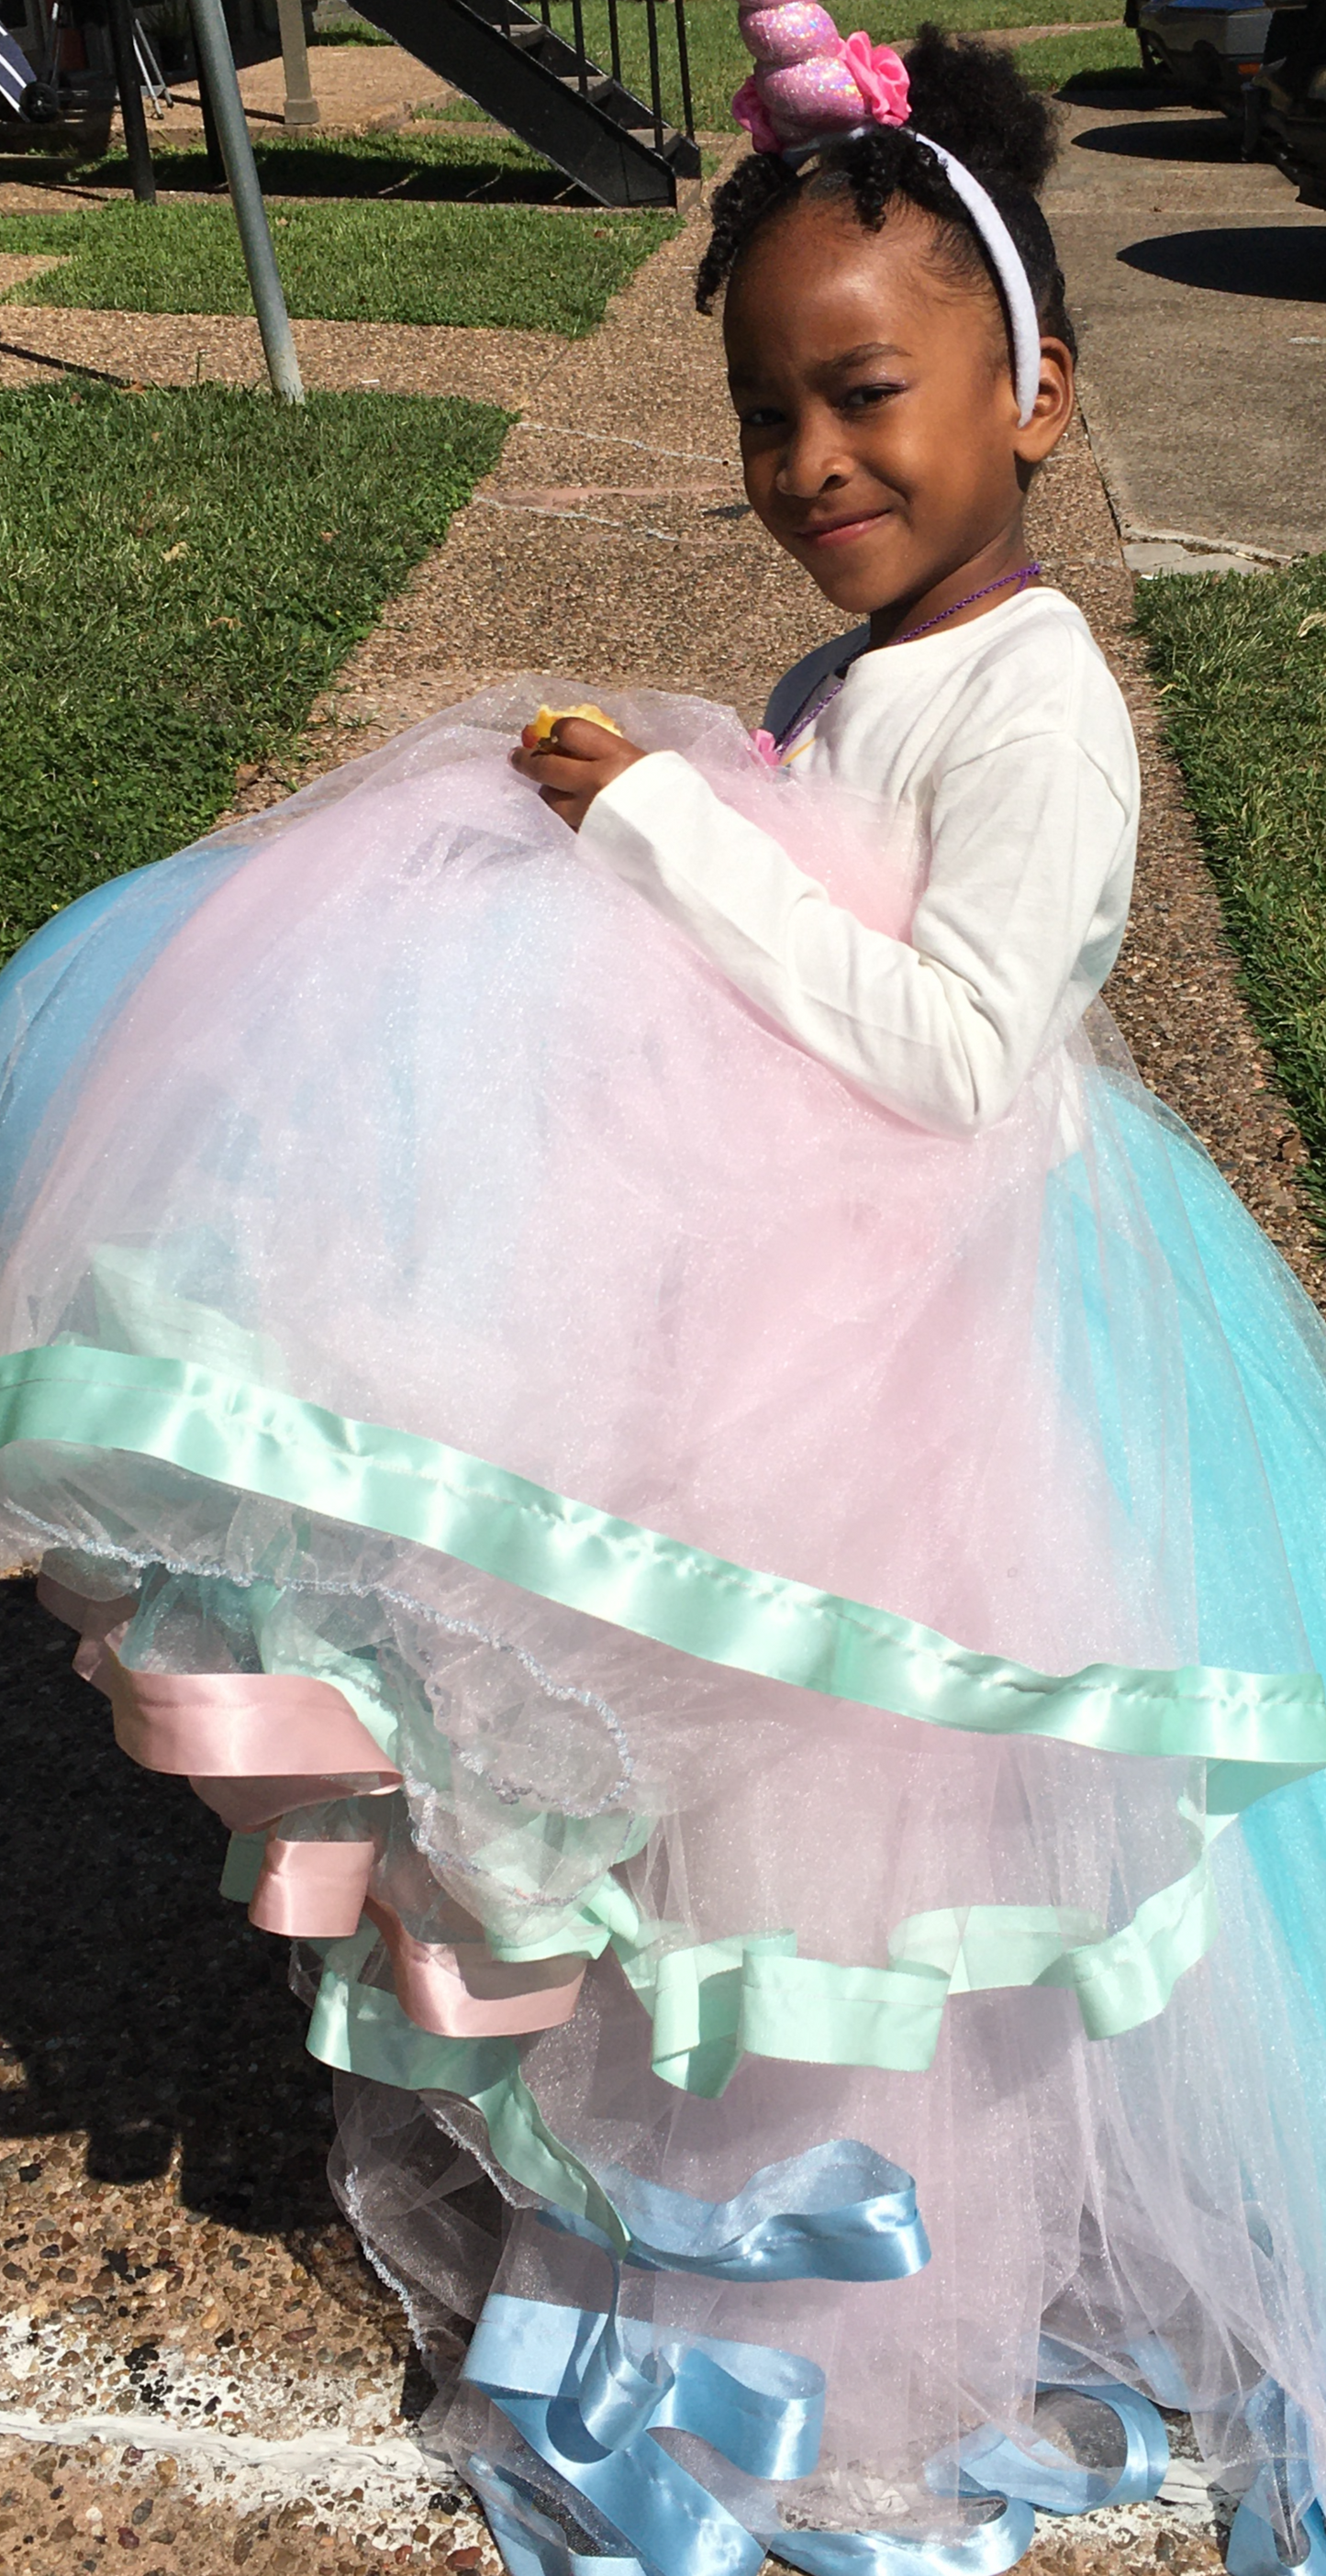 Cinderella Skirt/Dress